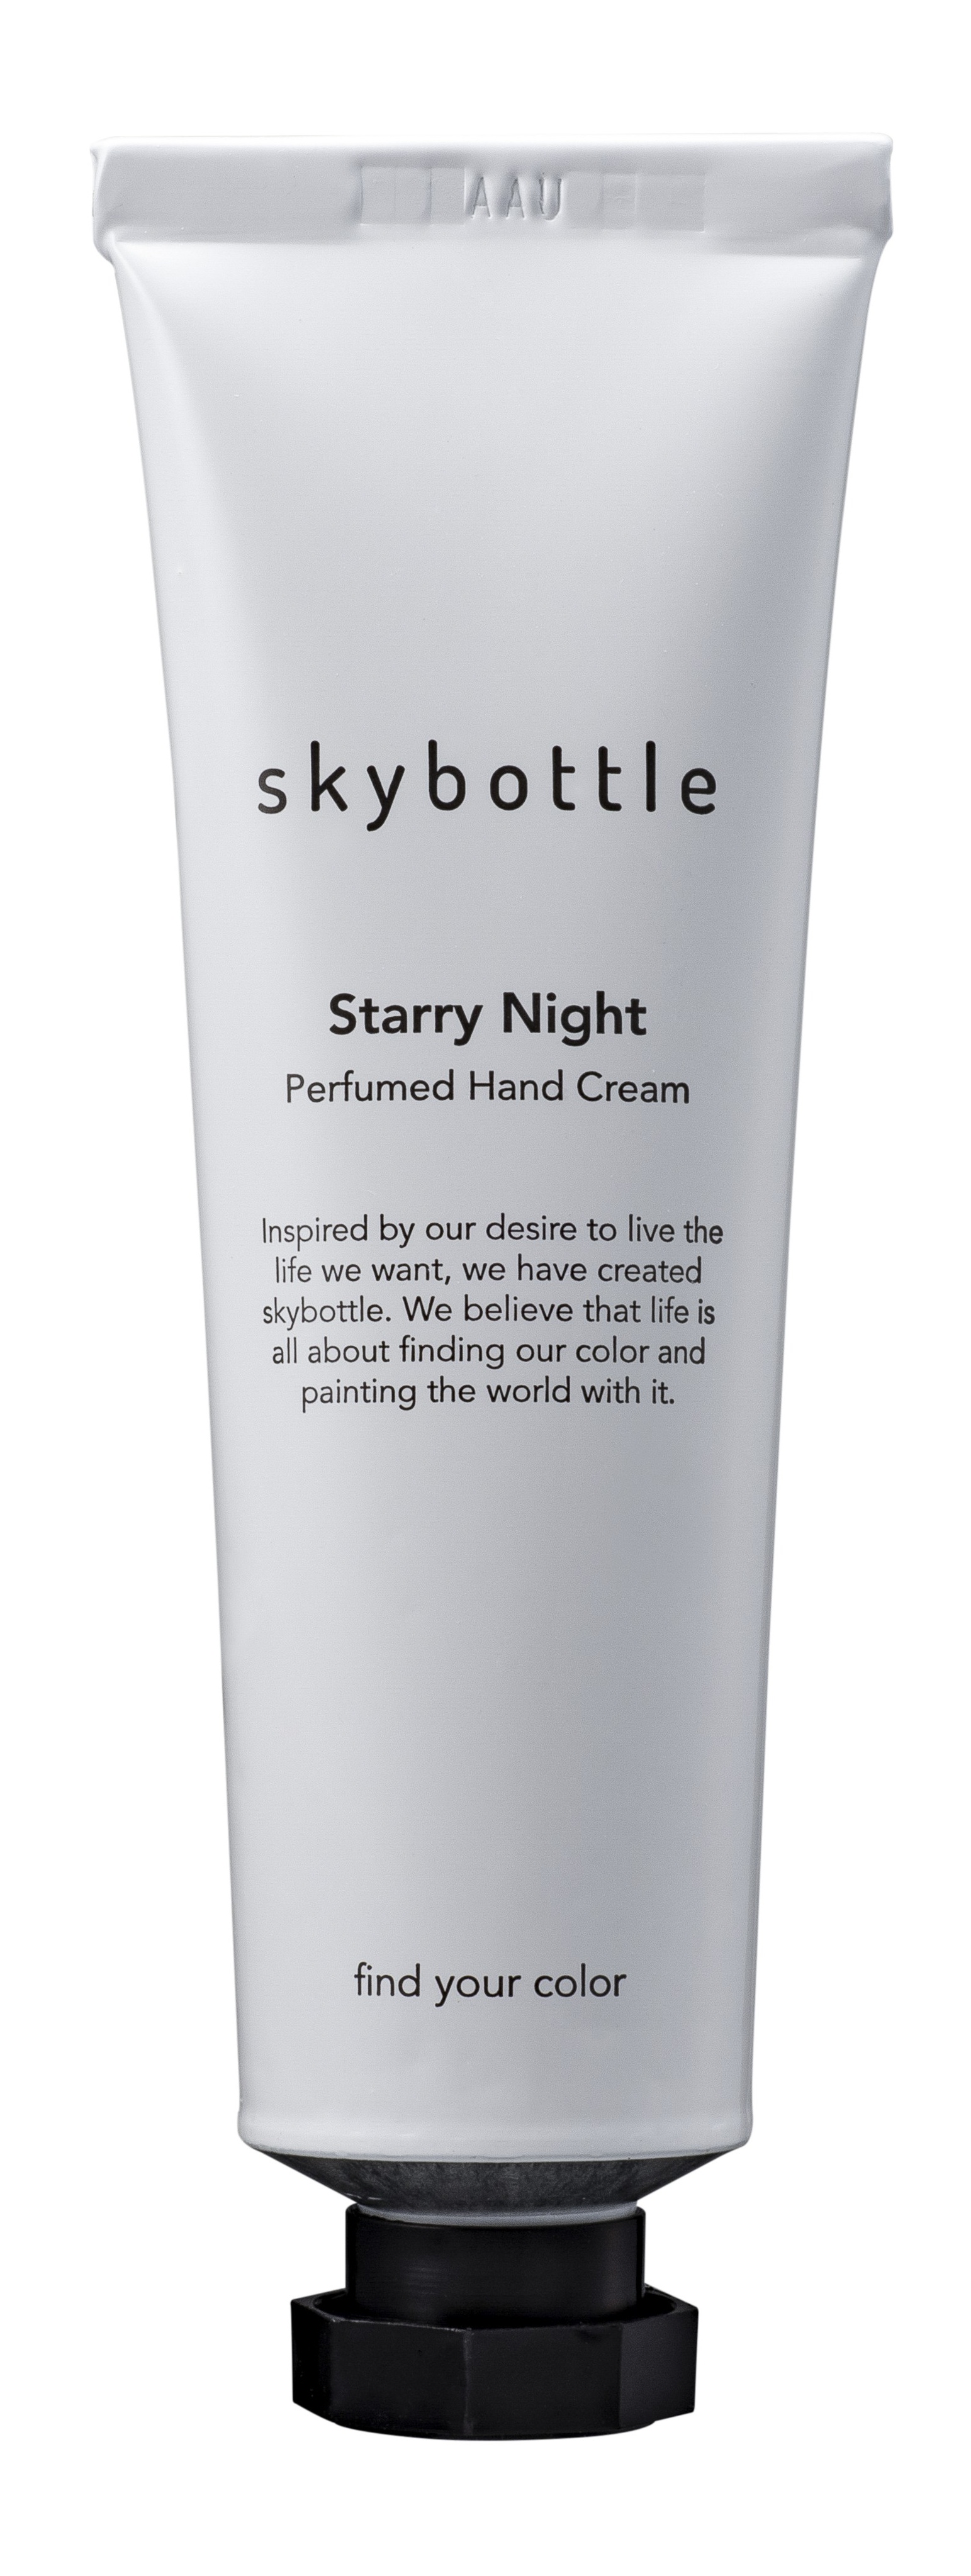 Skybottle Starry Night Perfumed Hand Cream